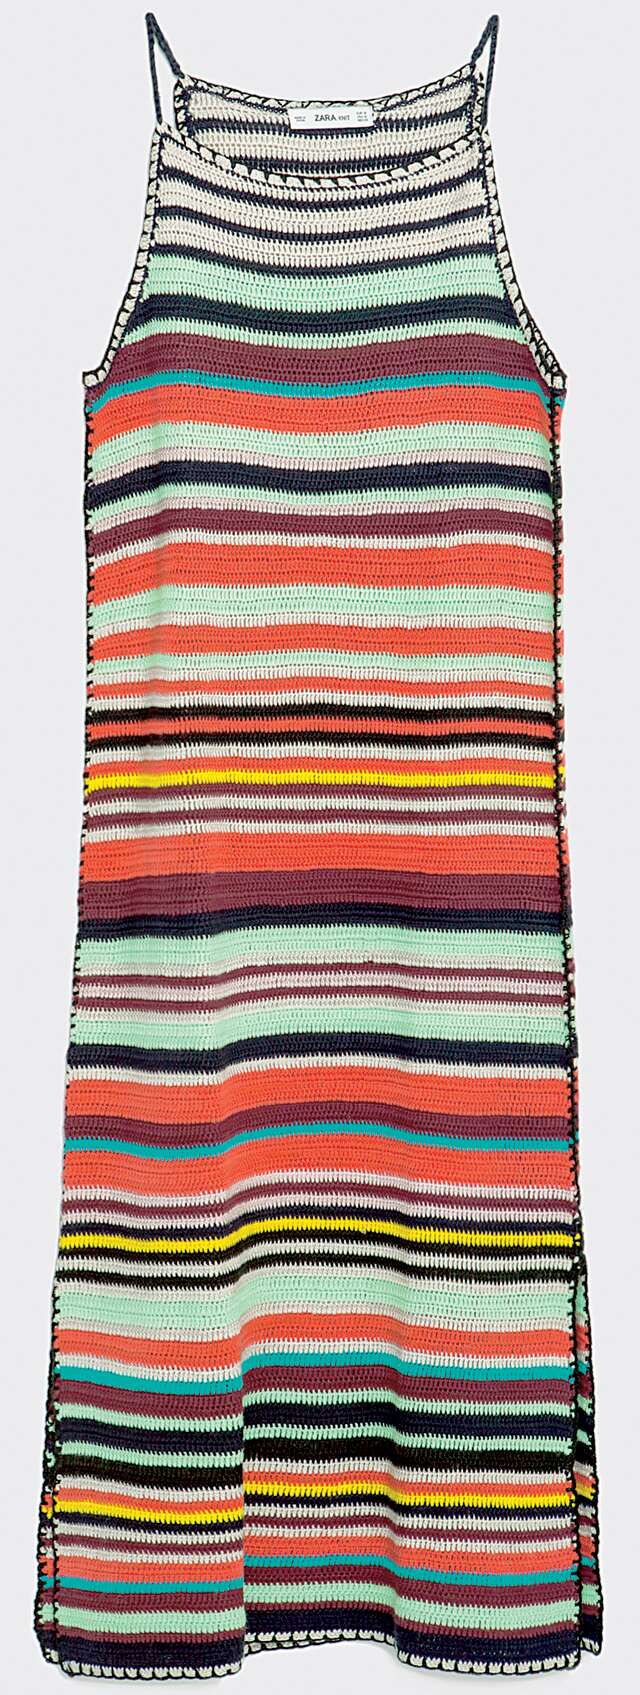 The bohemian crochet trend | Femina.in